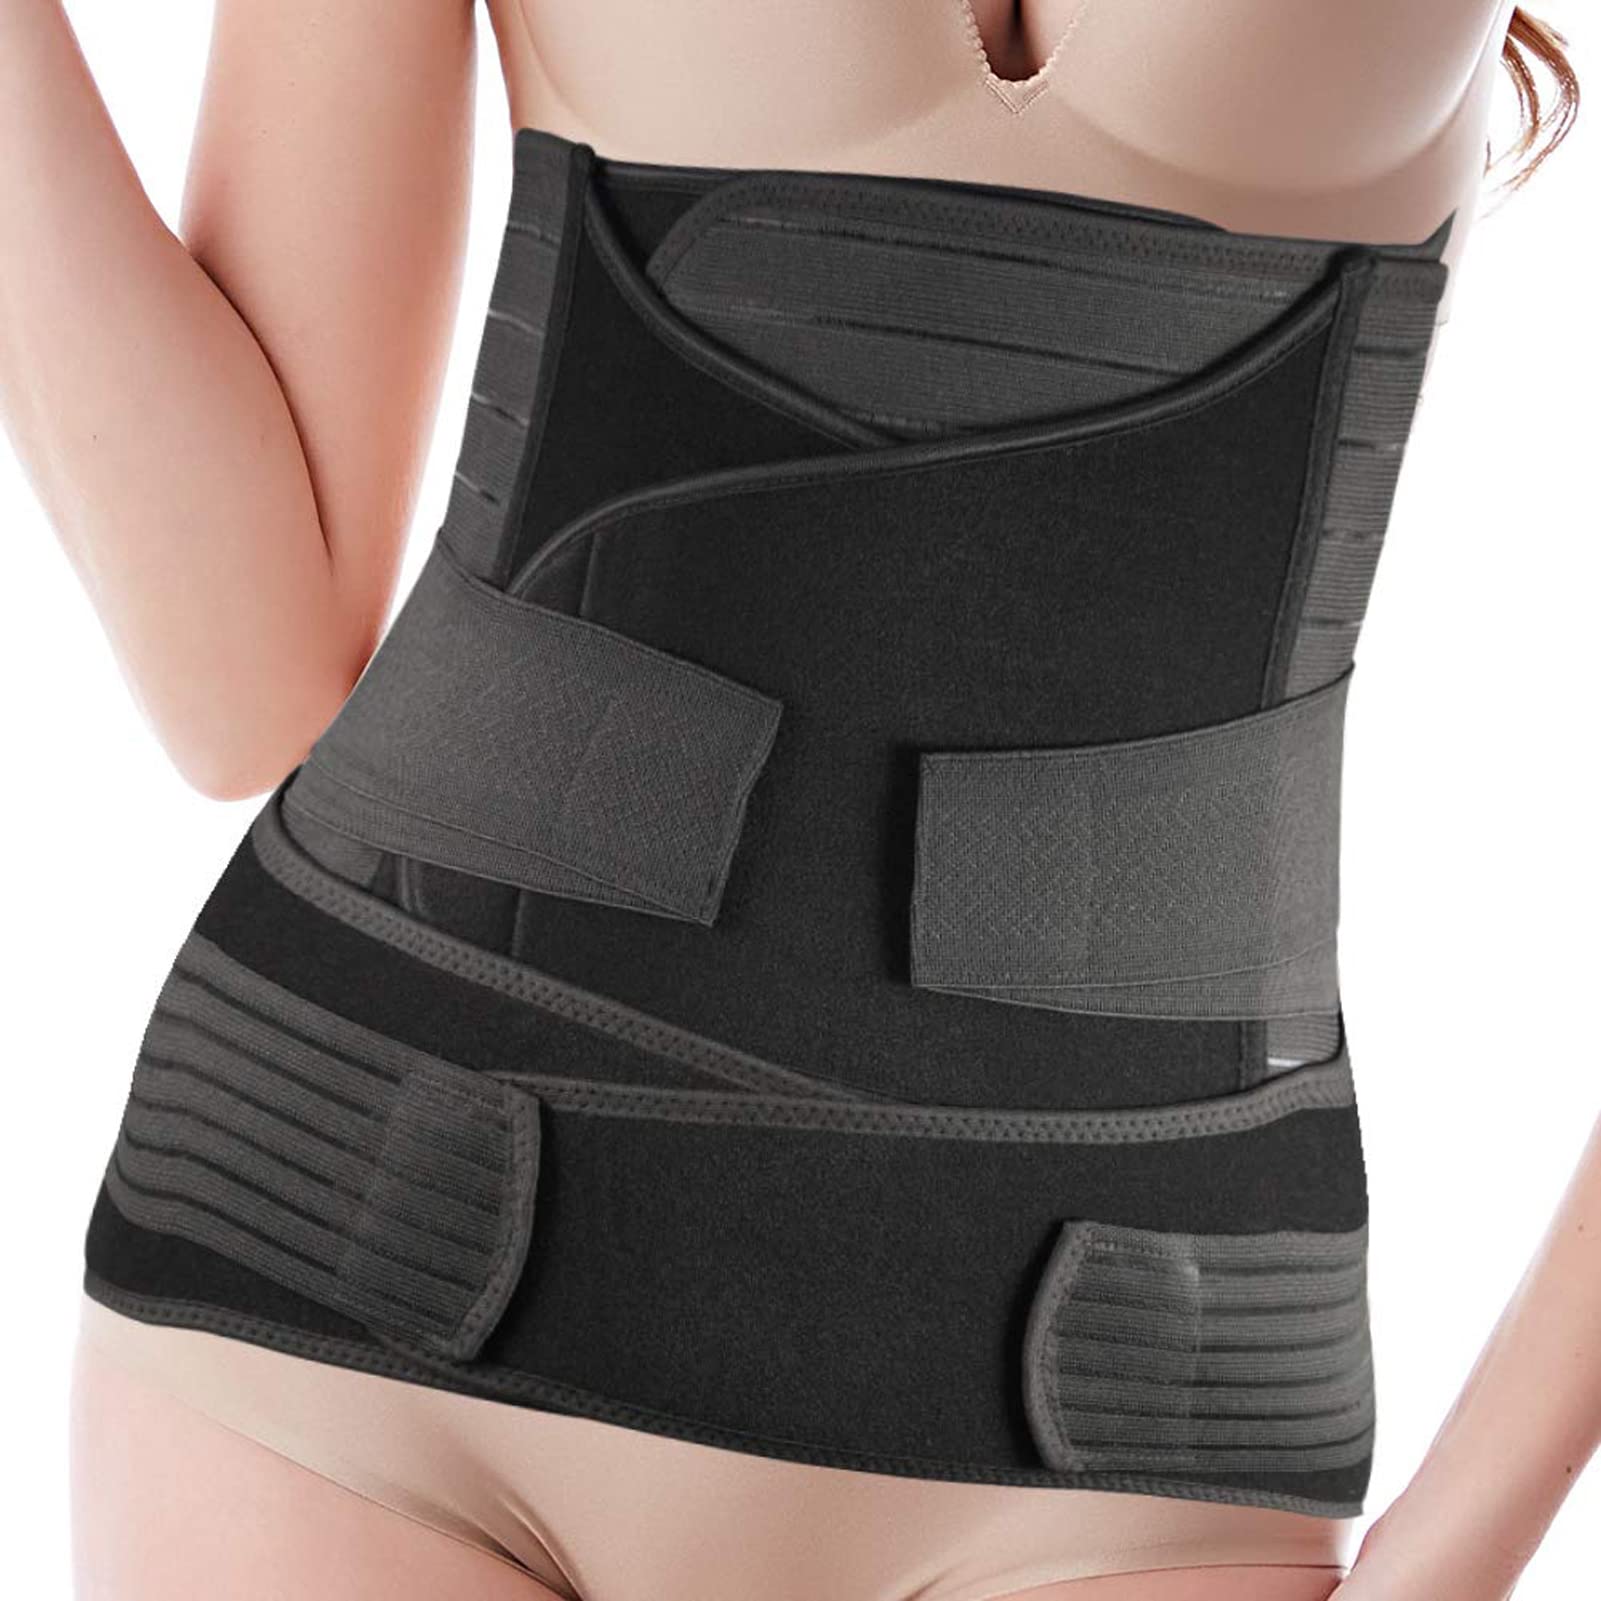 Postpartum Support, Elastic And Breathable C-Section Recovery Girdle Belly  Belt Waist/Pelvis Belt Postnatal Body Shaper Belt Girdle Shapewear 3 Pieces